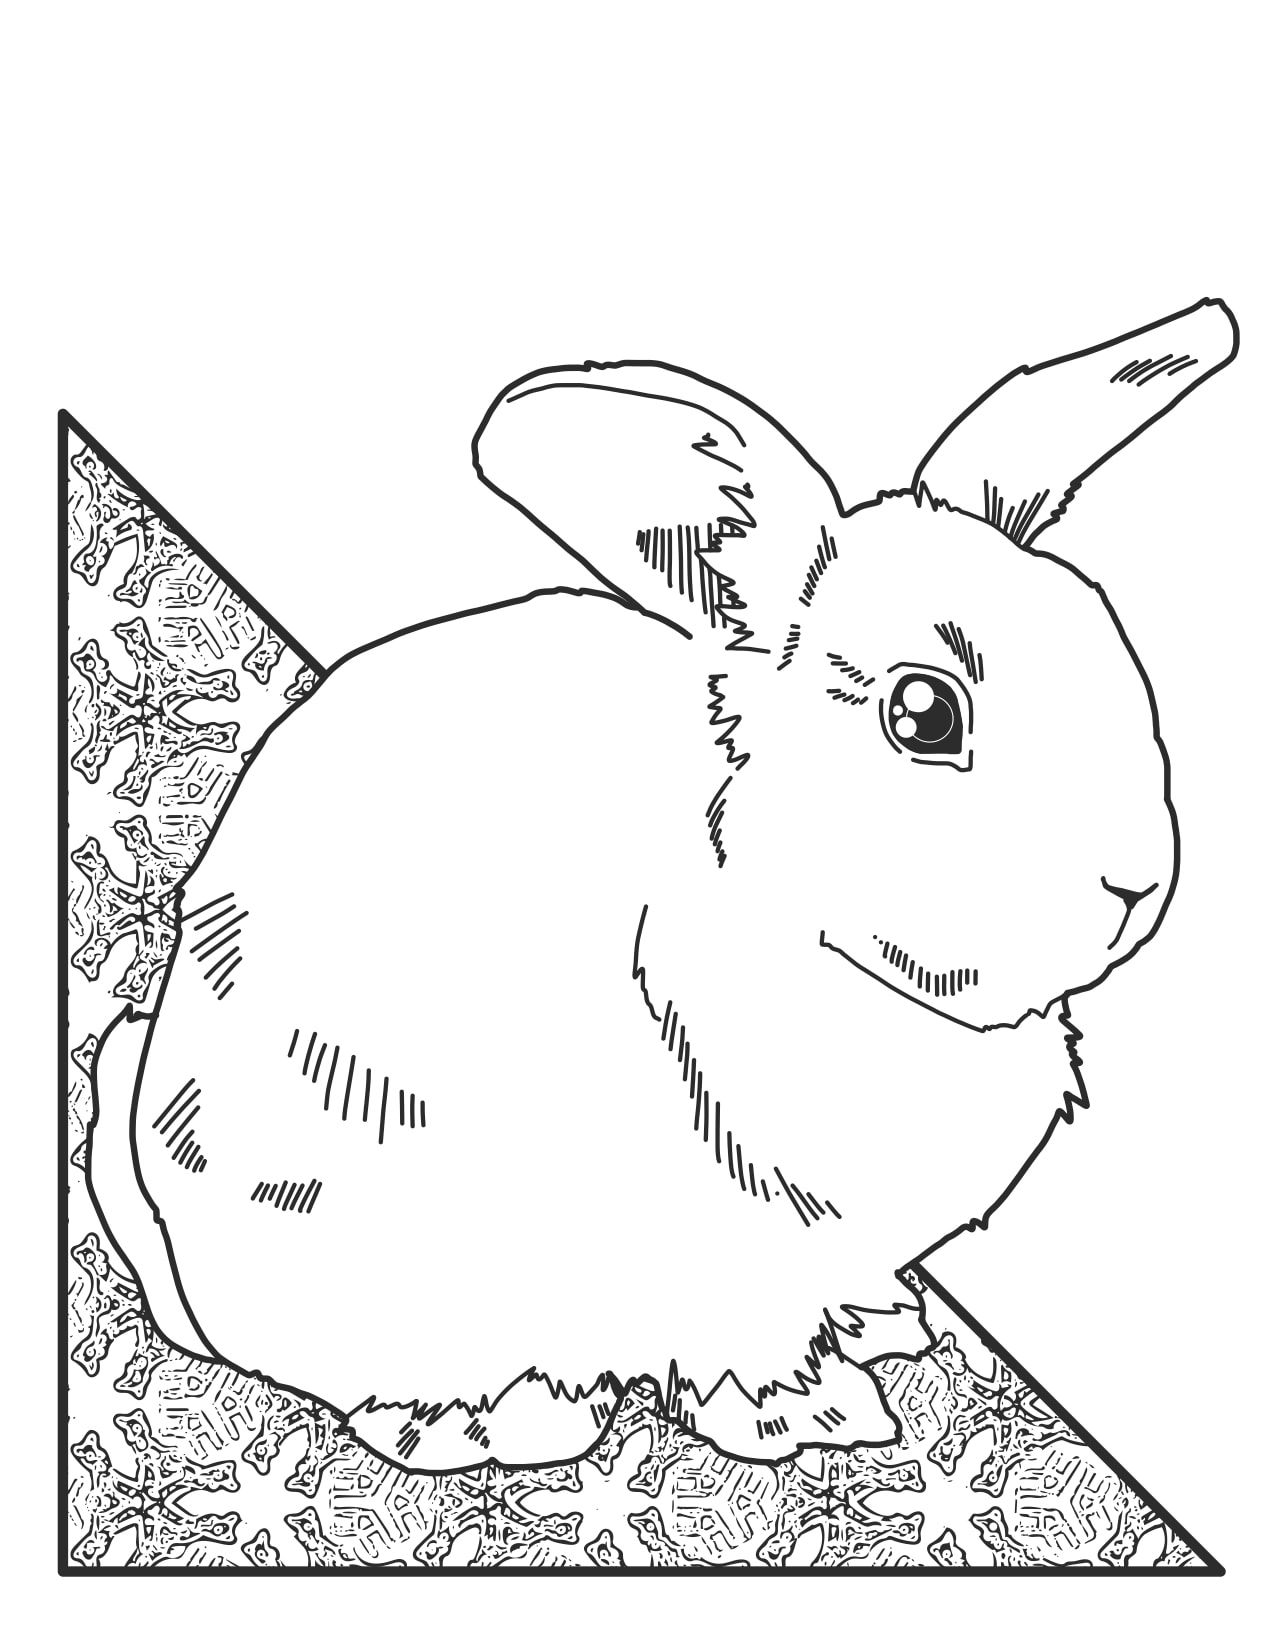 Downloadable Coloring Page- Mumu the Rabbit